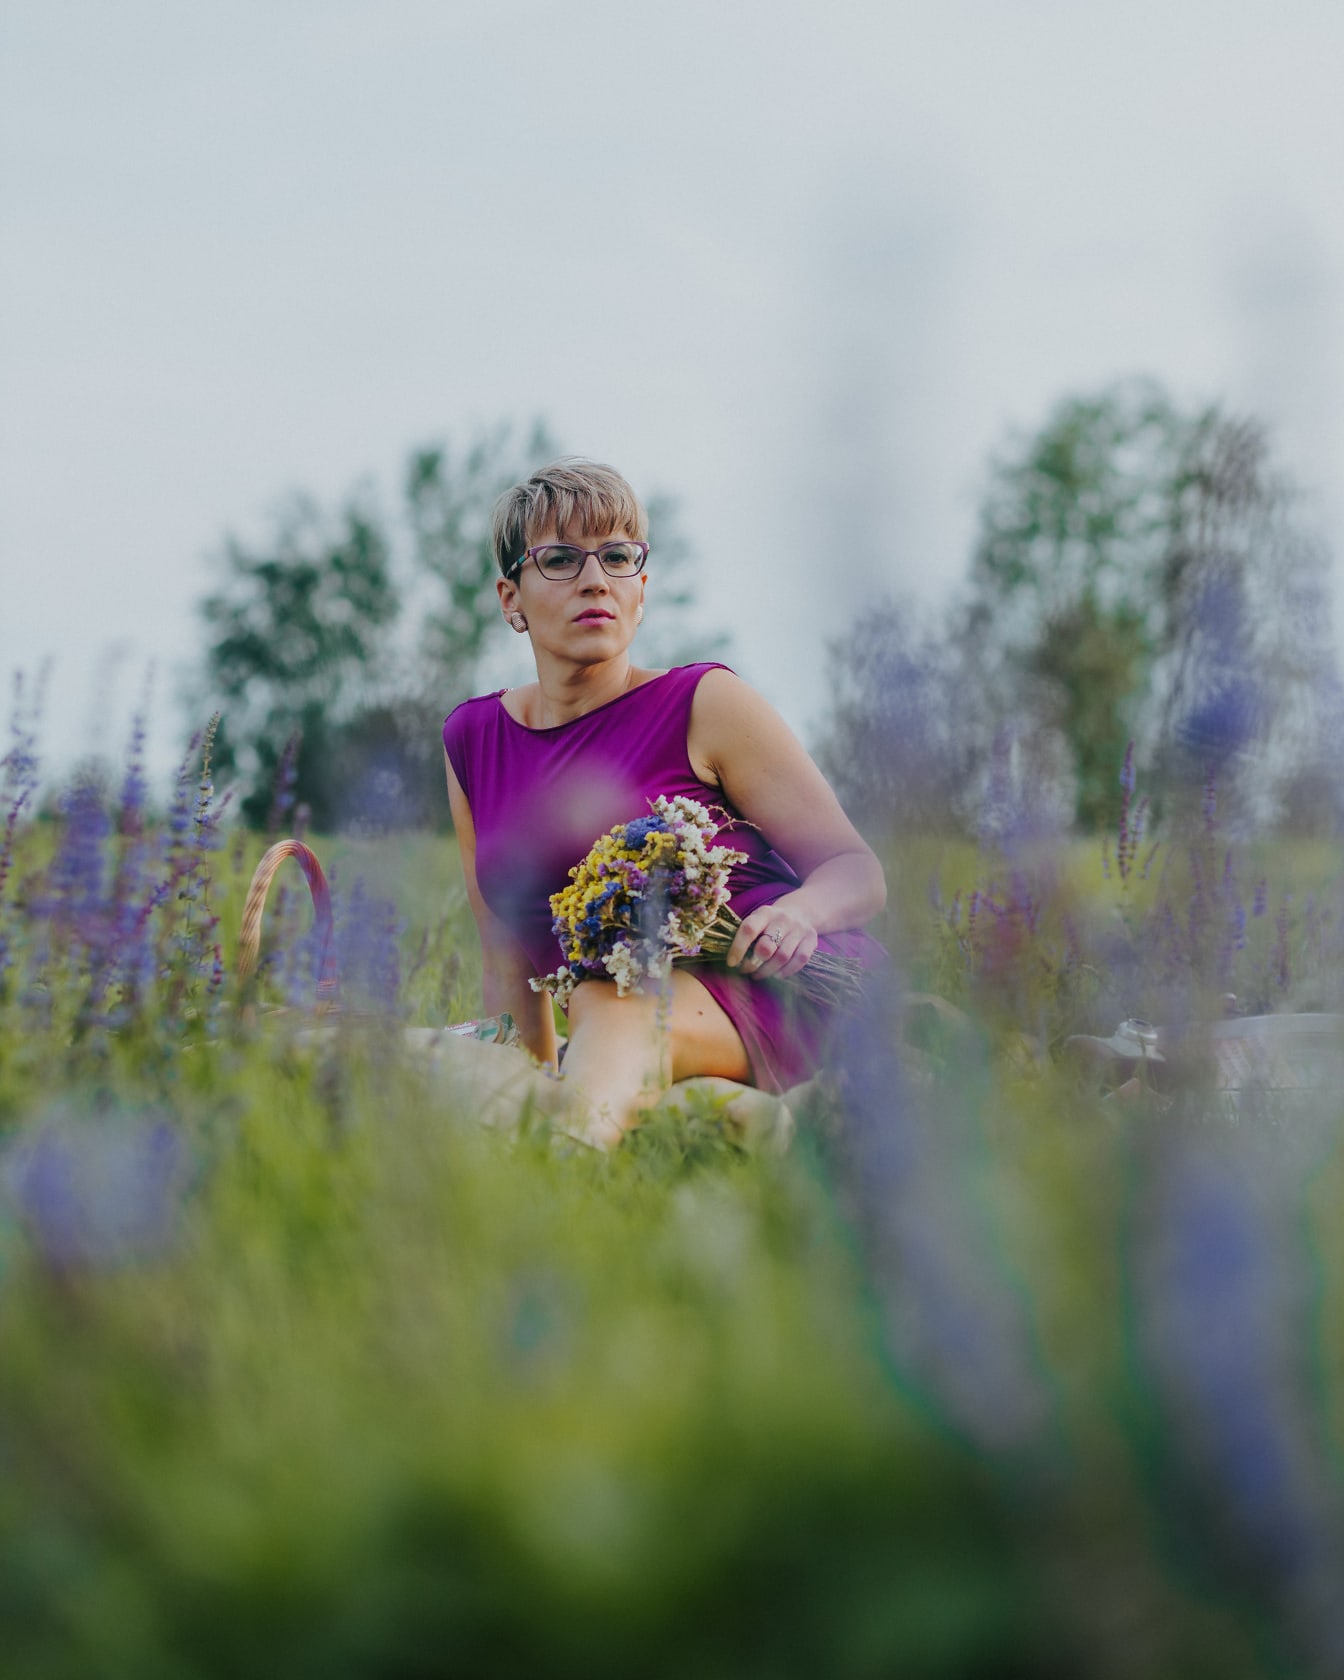 Retrato de la dama bonita en vestido púrpura sentada en el prado